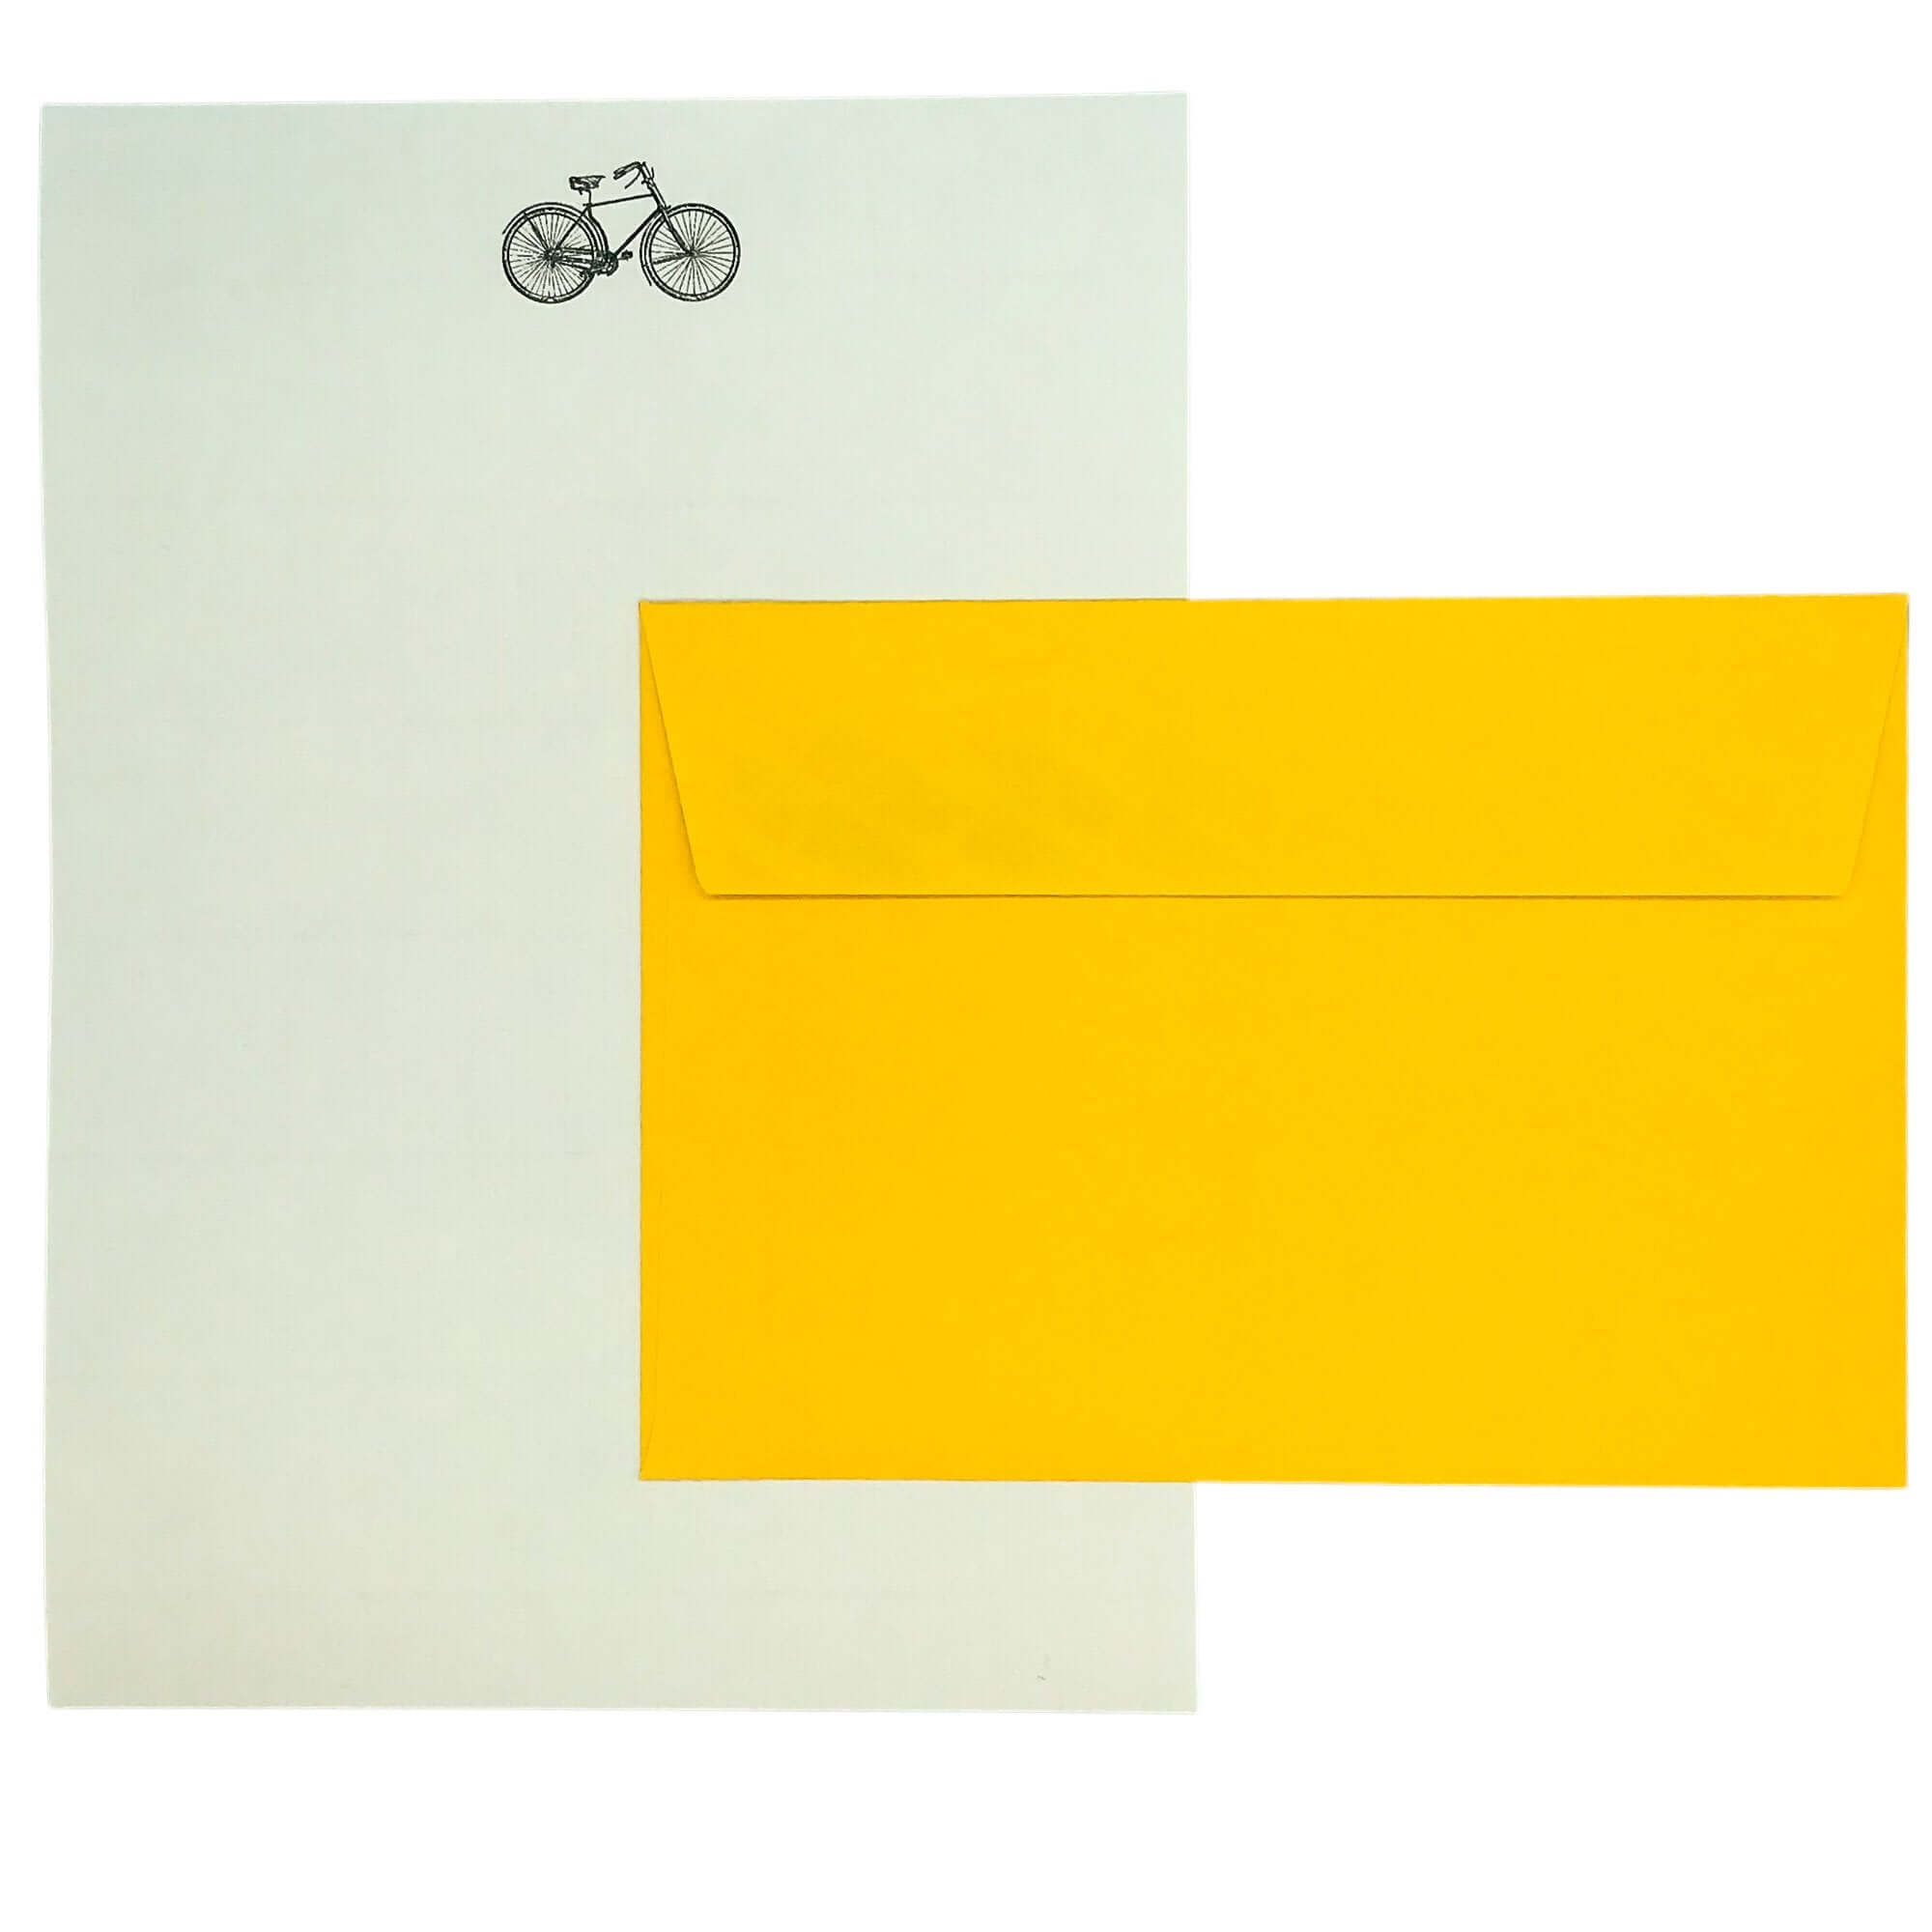 Bicycle Writing Paper Compendium